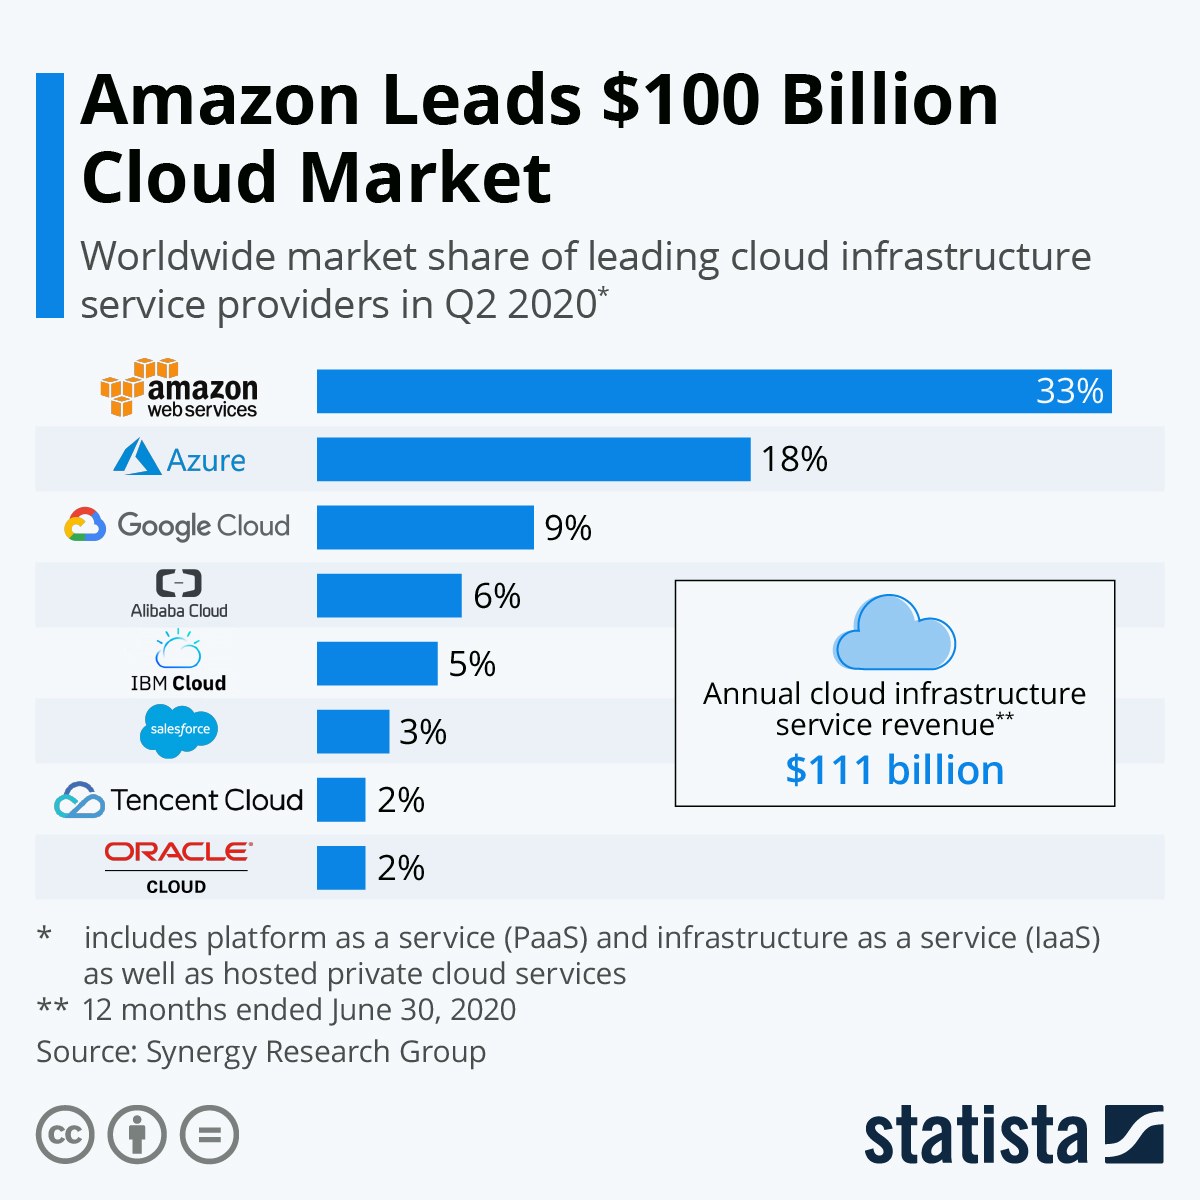 annual cloud infrastructure service revenue